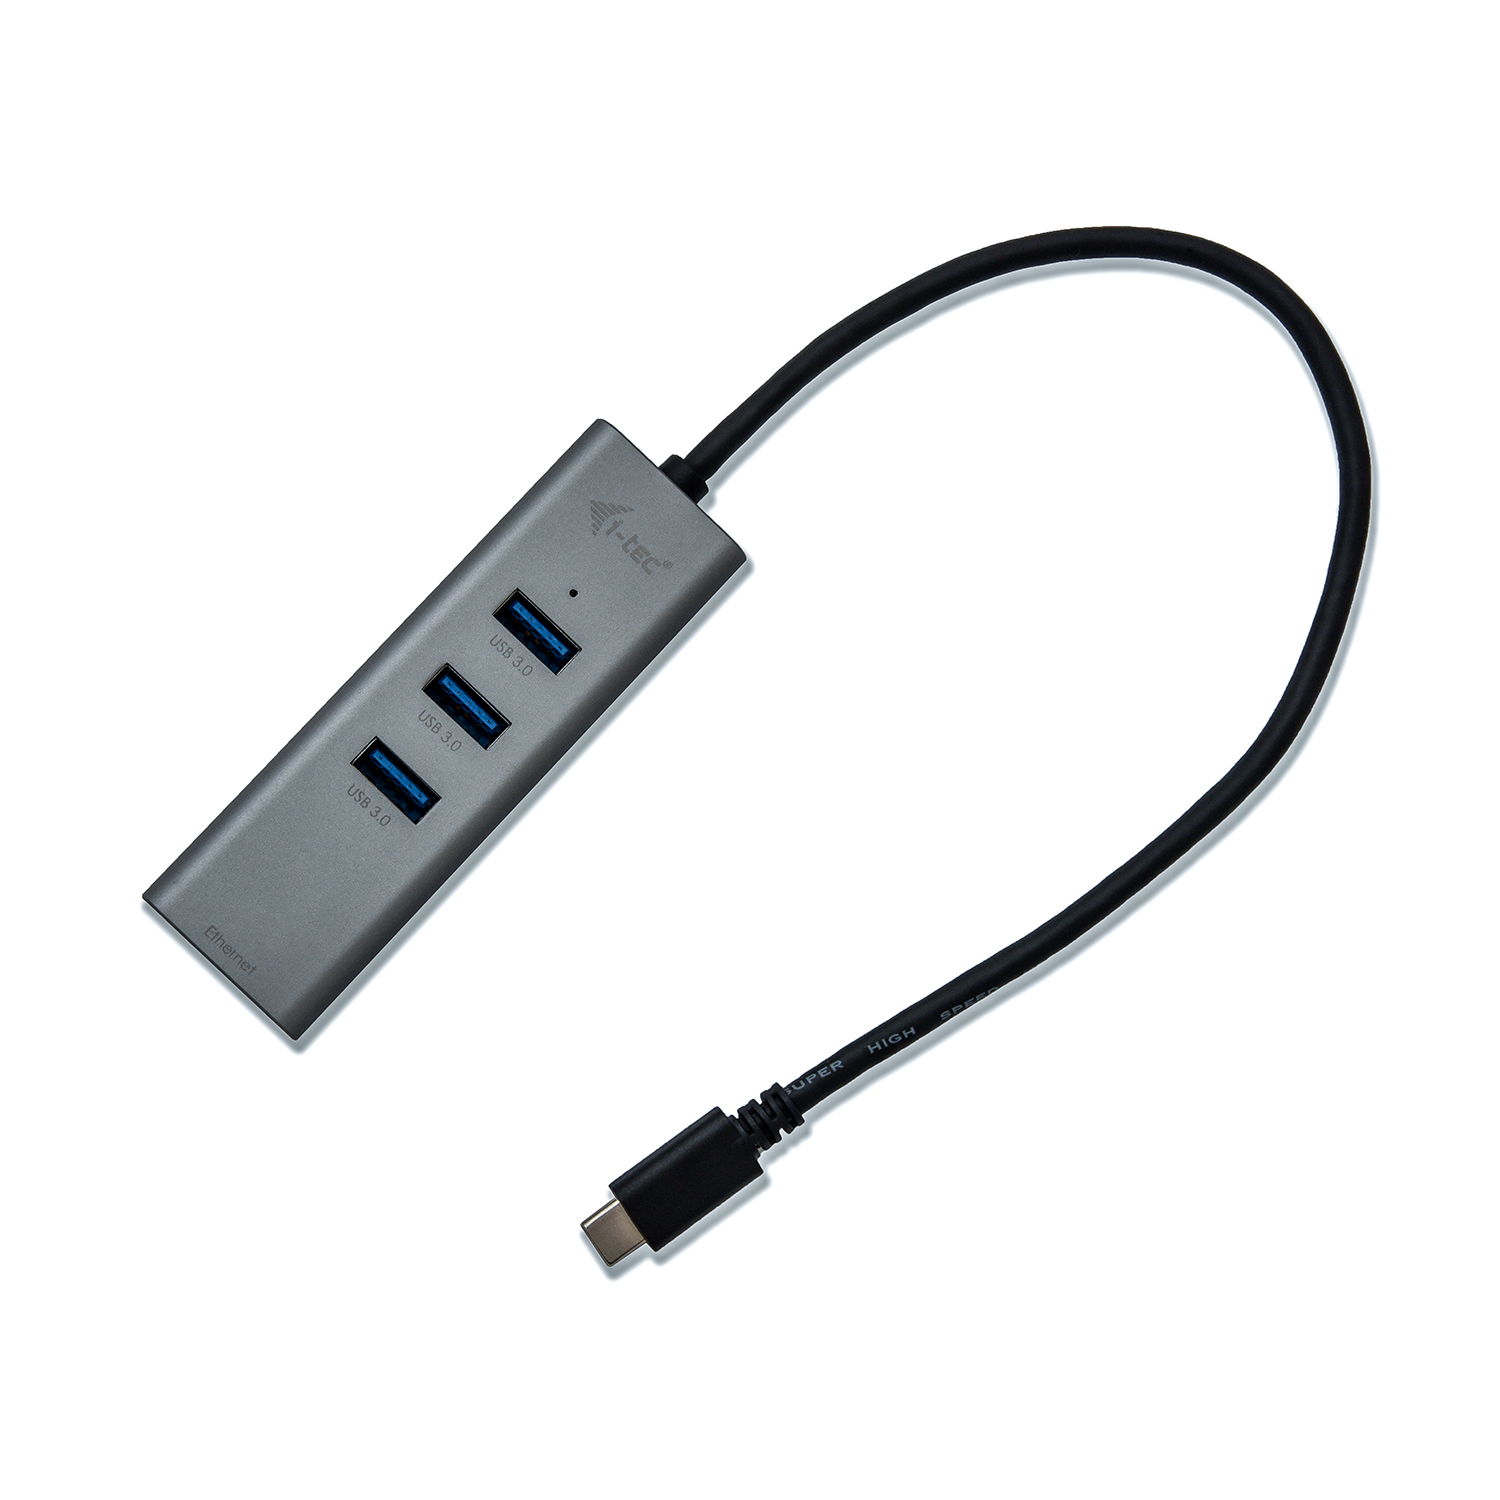 i-tec USB-C Metal HUB 3 Port + Gigabit Ethernet 